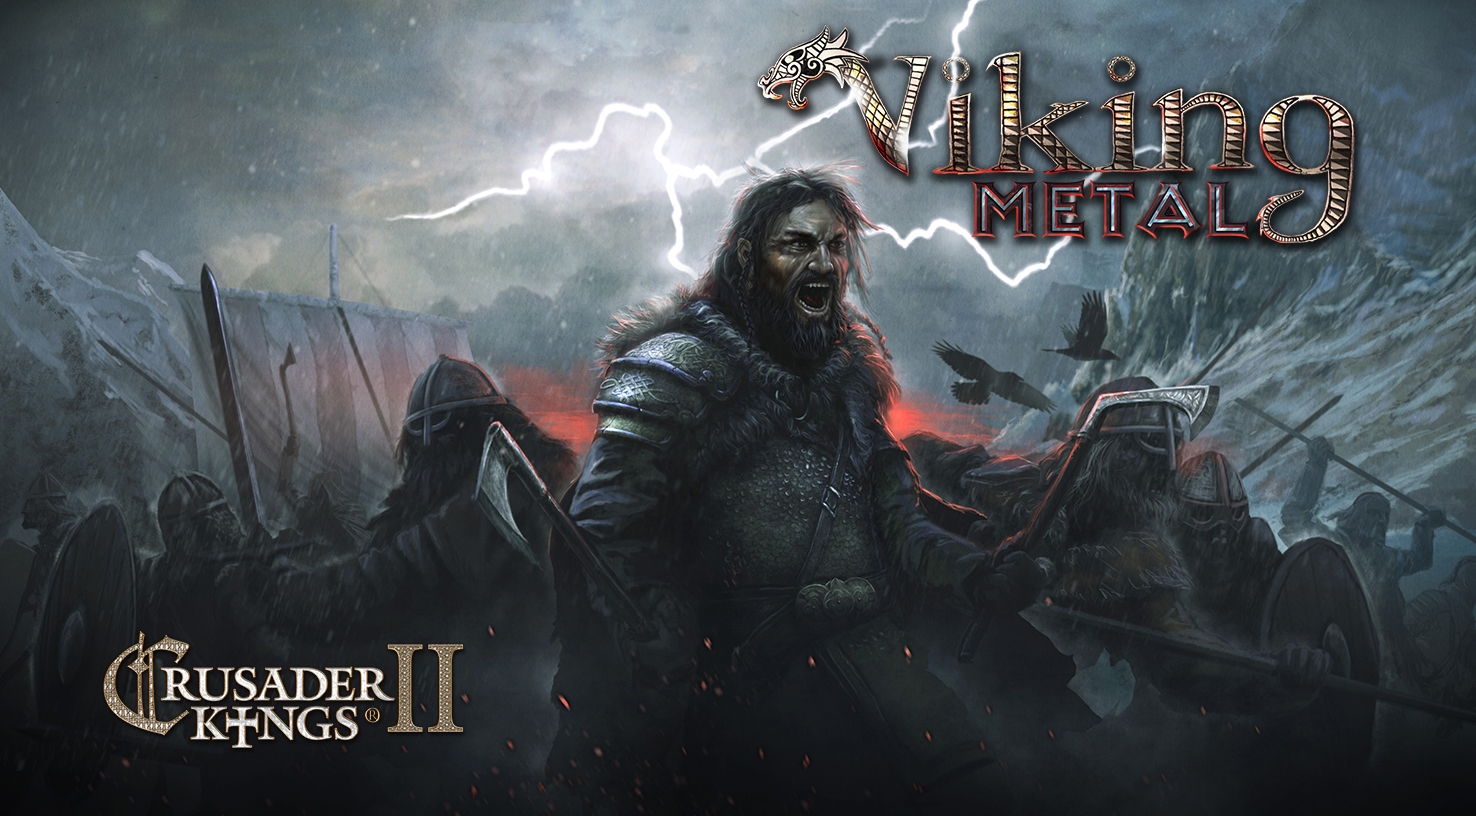 Crusader Kings II: Viking Metal Featured Screenshot #1